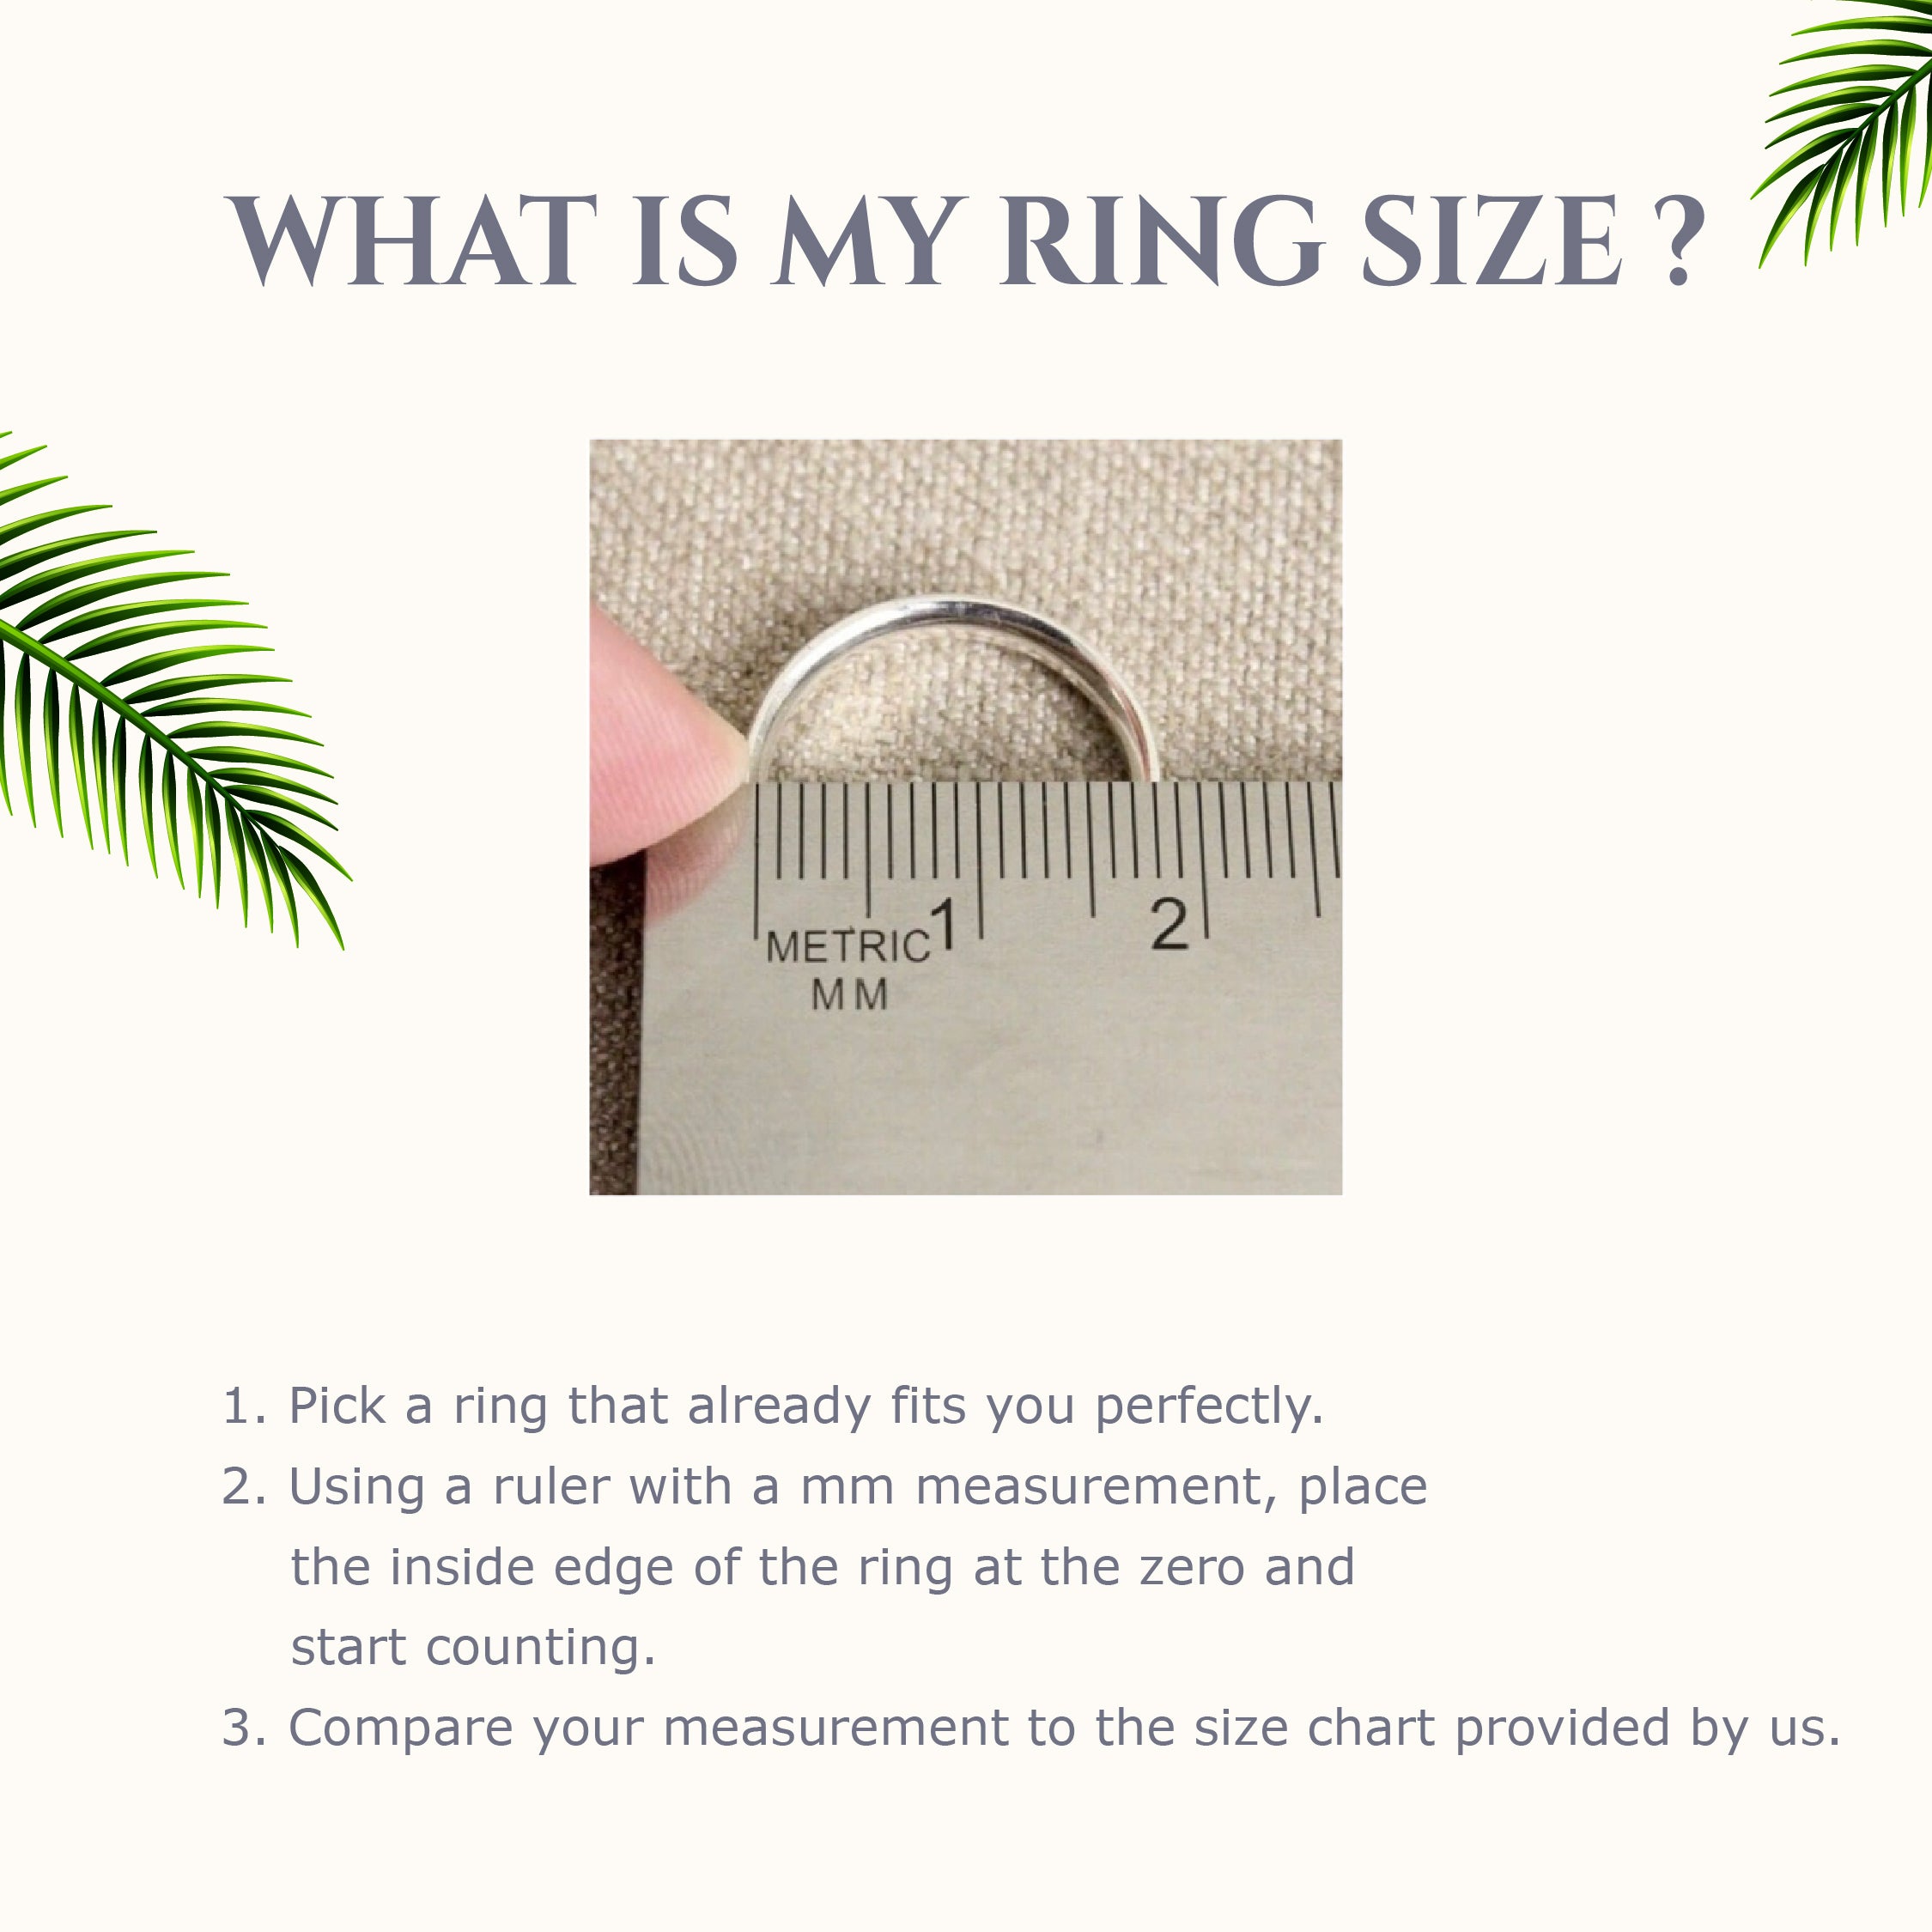 Ruby Octane Brilliance: The Octagon-Cut Diamond Ring